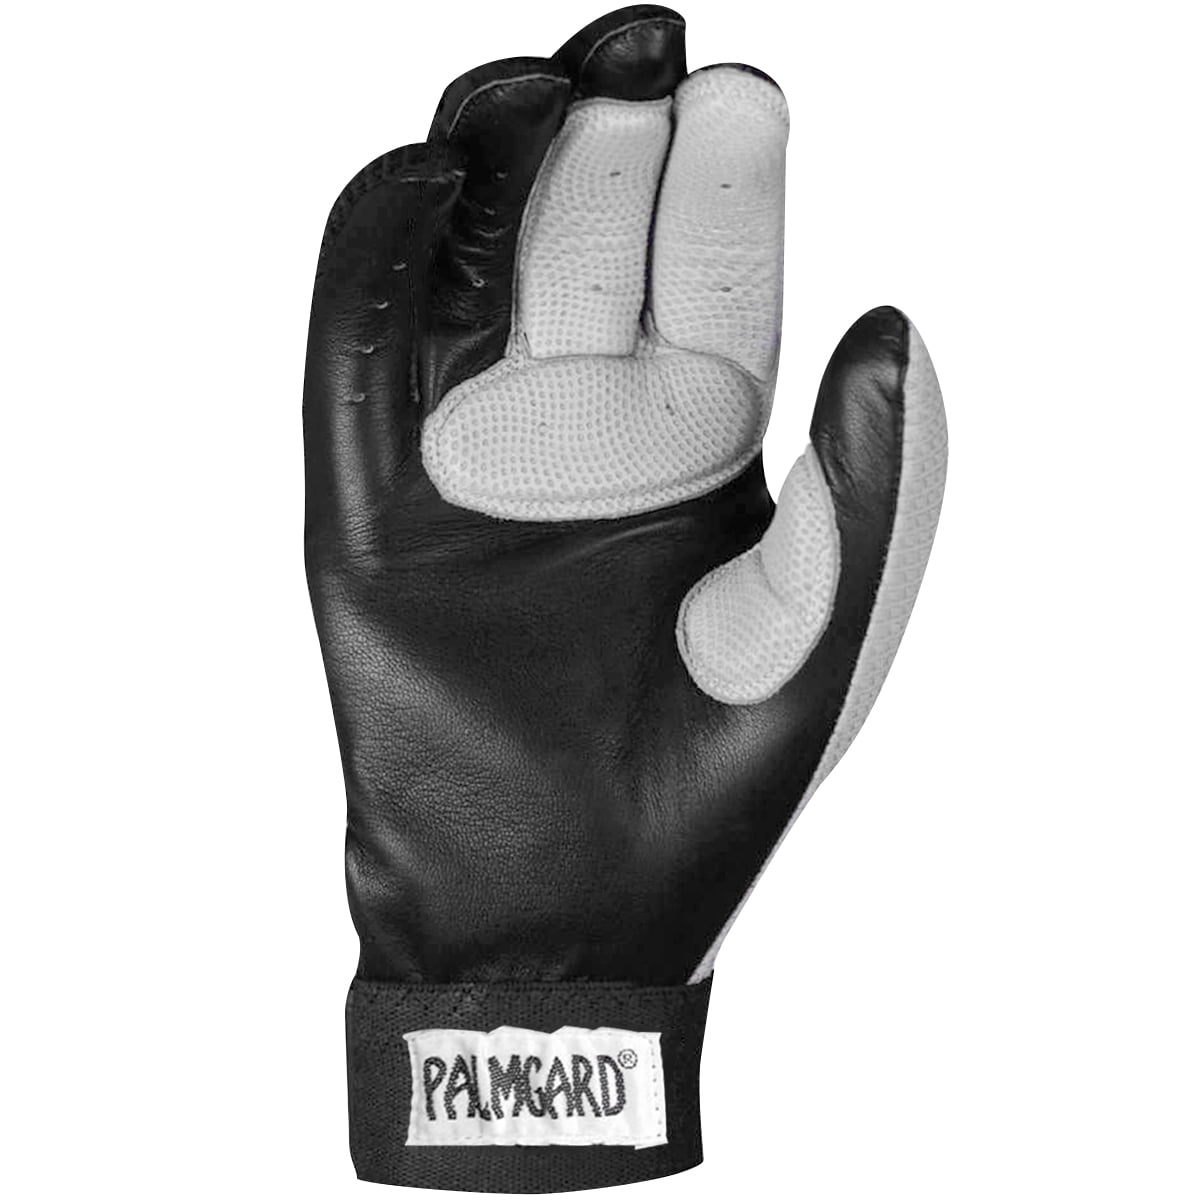 Palmgard Adult Left Hand Xtra Protective Inner Baseball and Softball Glove 